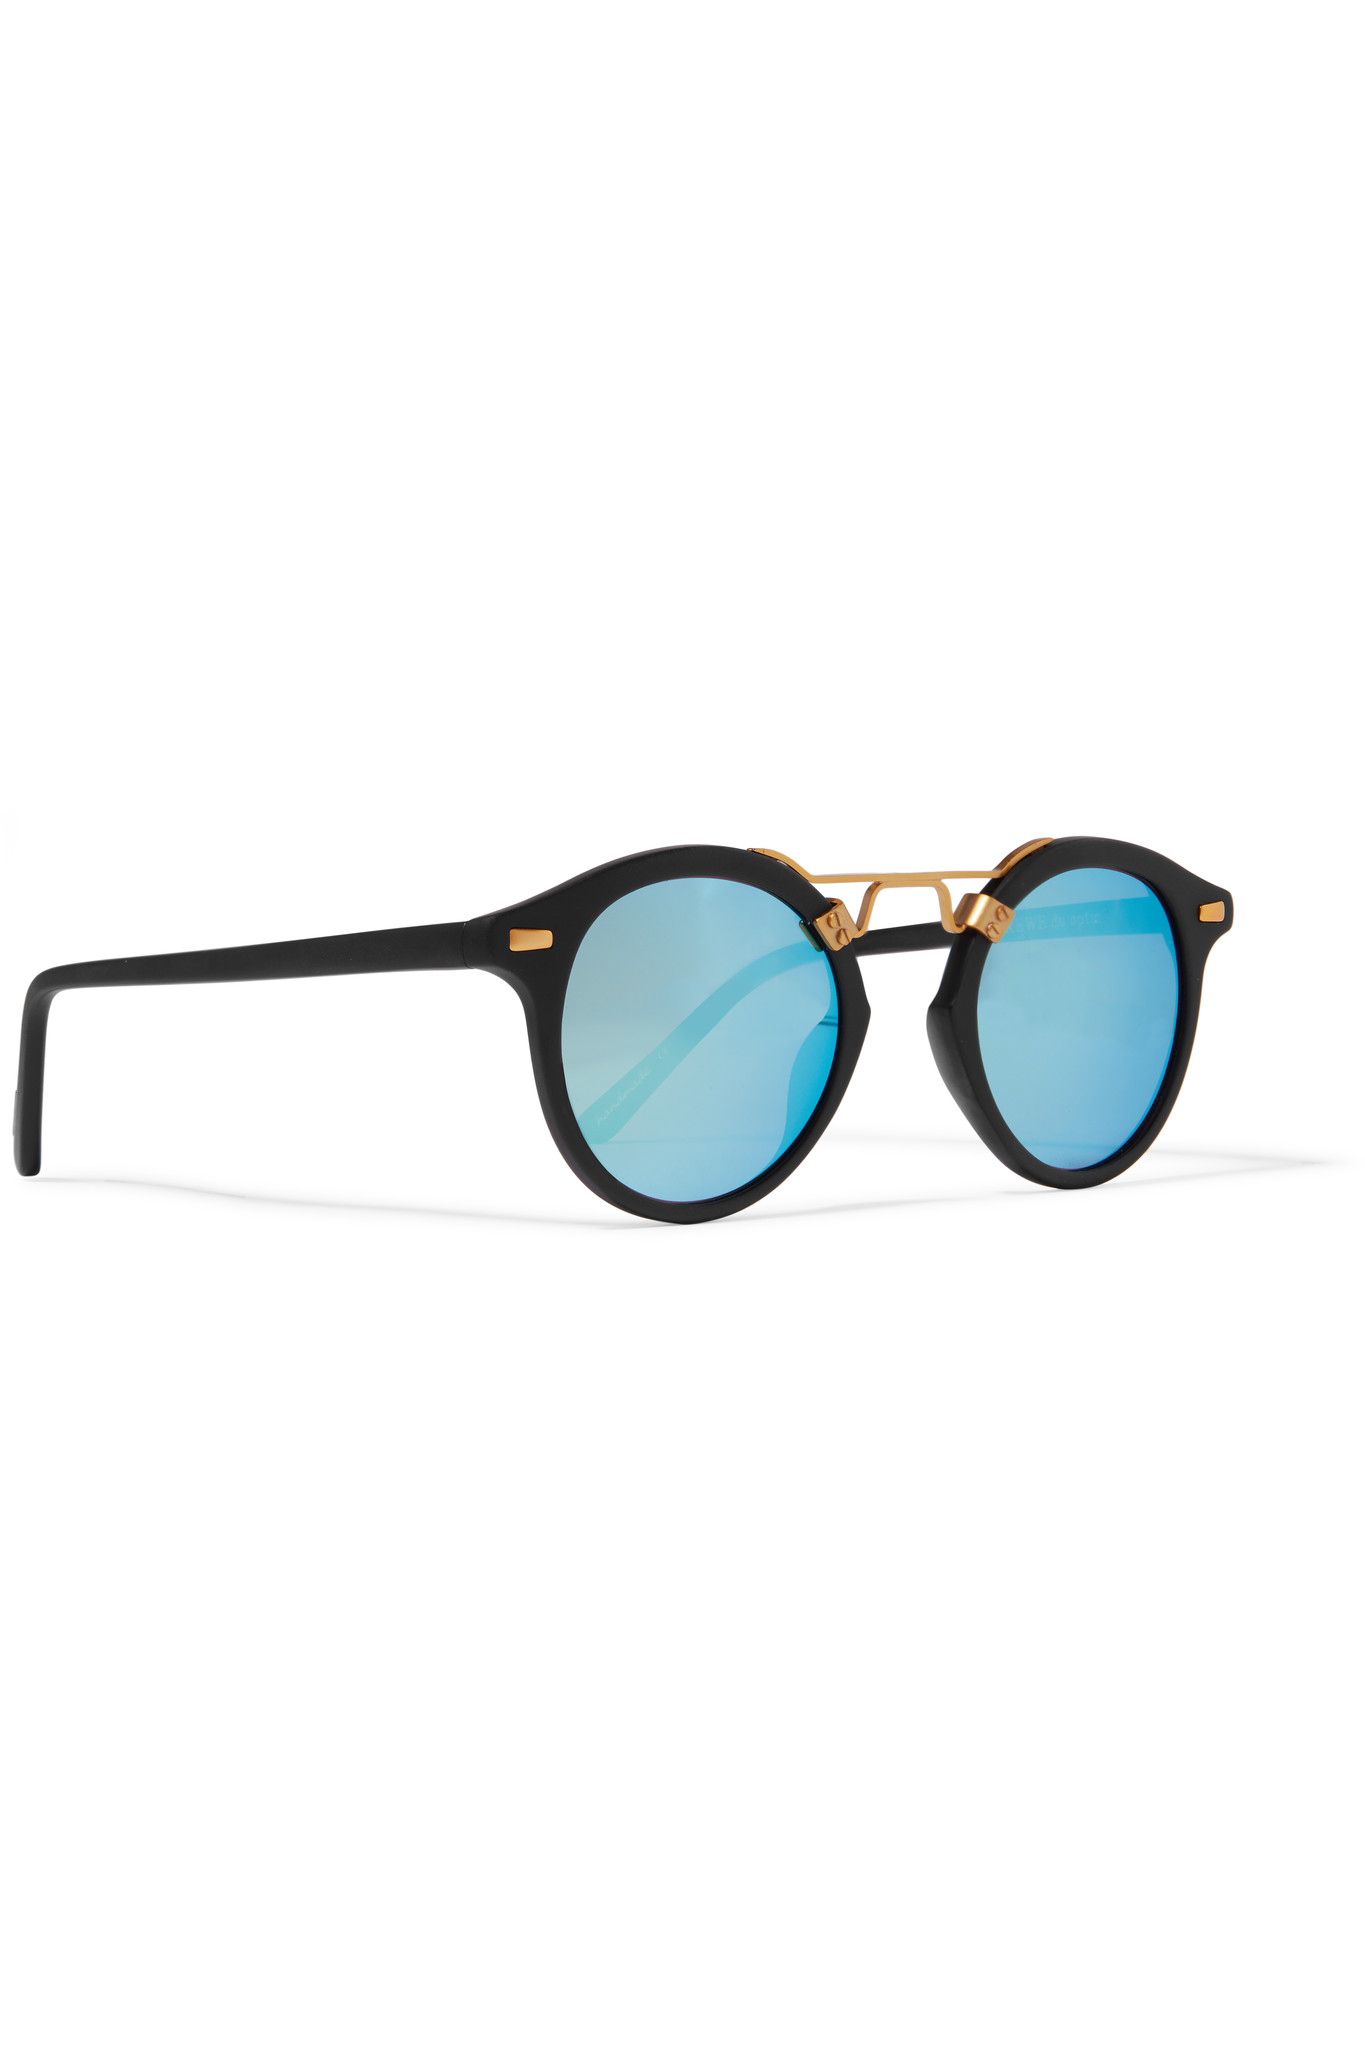 Lyst - Krewe St. Louis Round Mirrored Sunglasses in Black